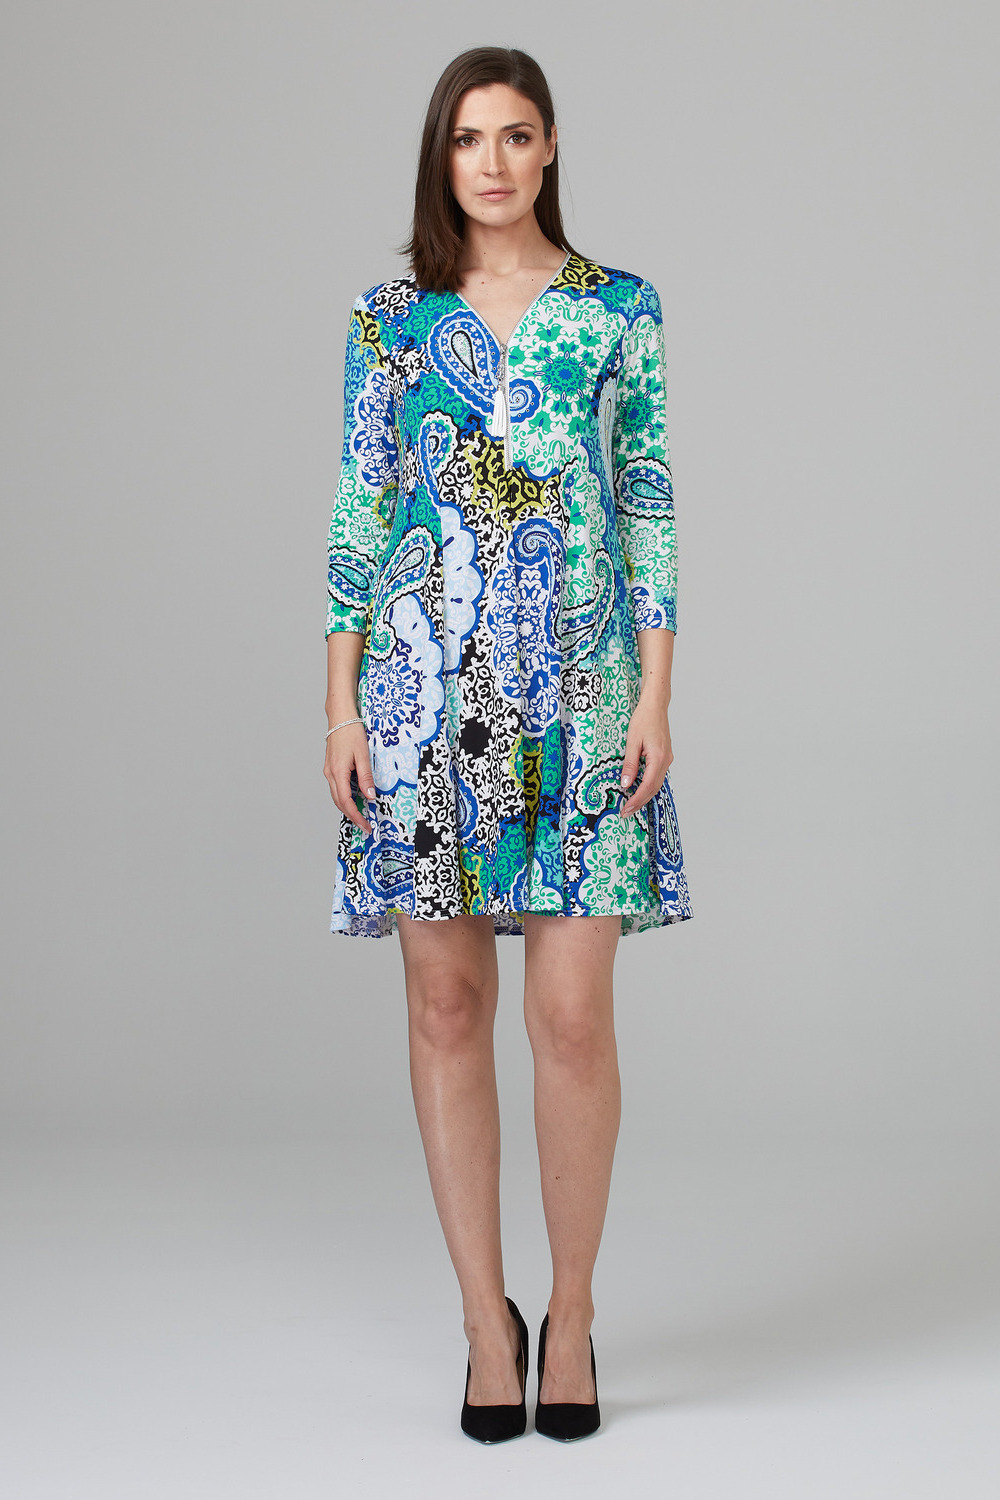 Joseph Ribkoff Dress Style 201408. Blue/multi